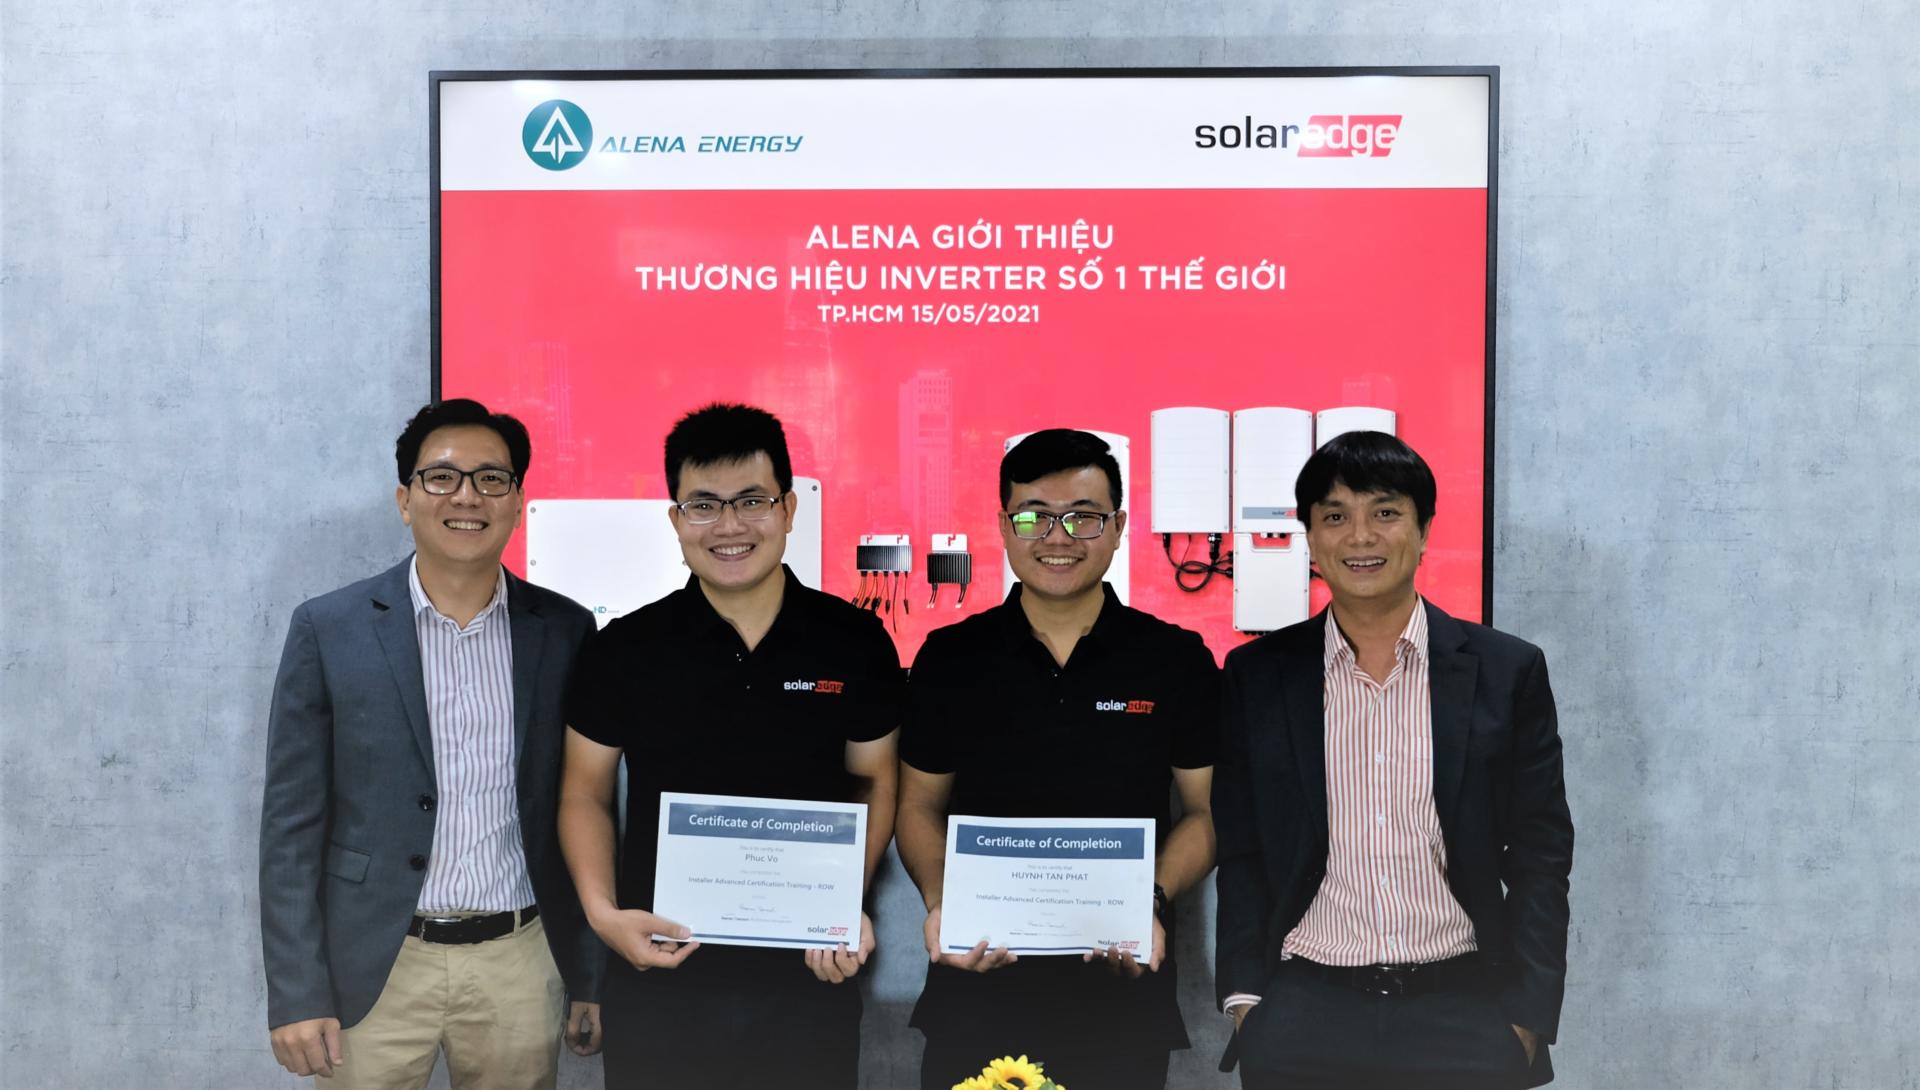 Alena Energy giới thiệu SolarEdge - thương hiệu inverter số 1 thế giới